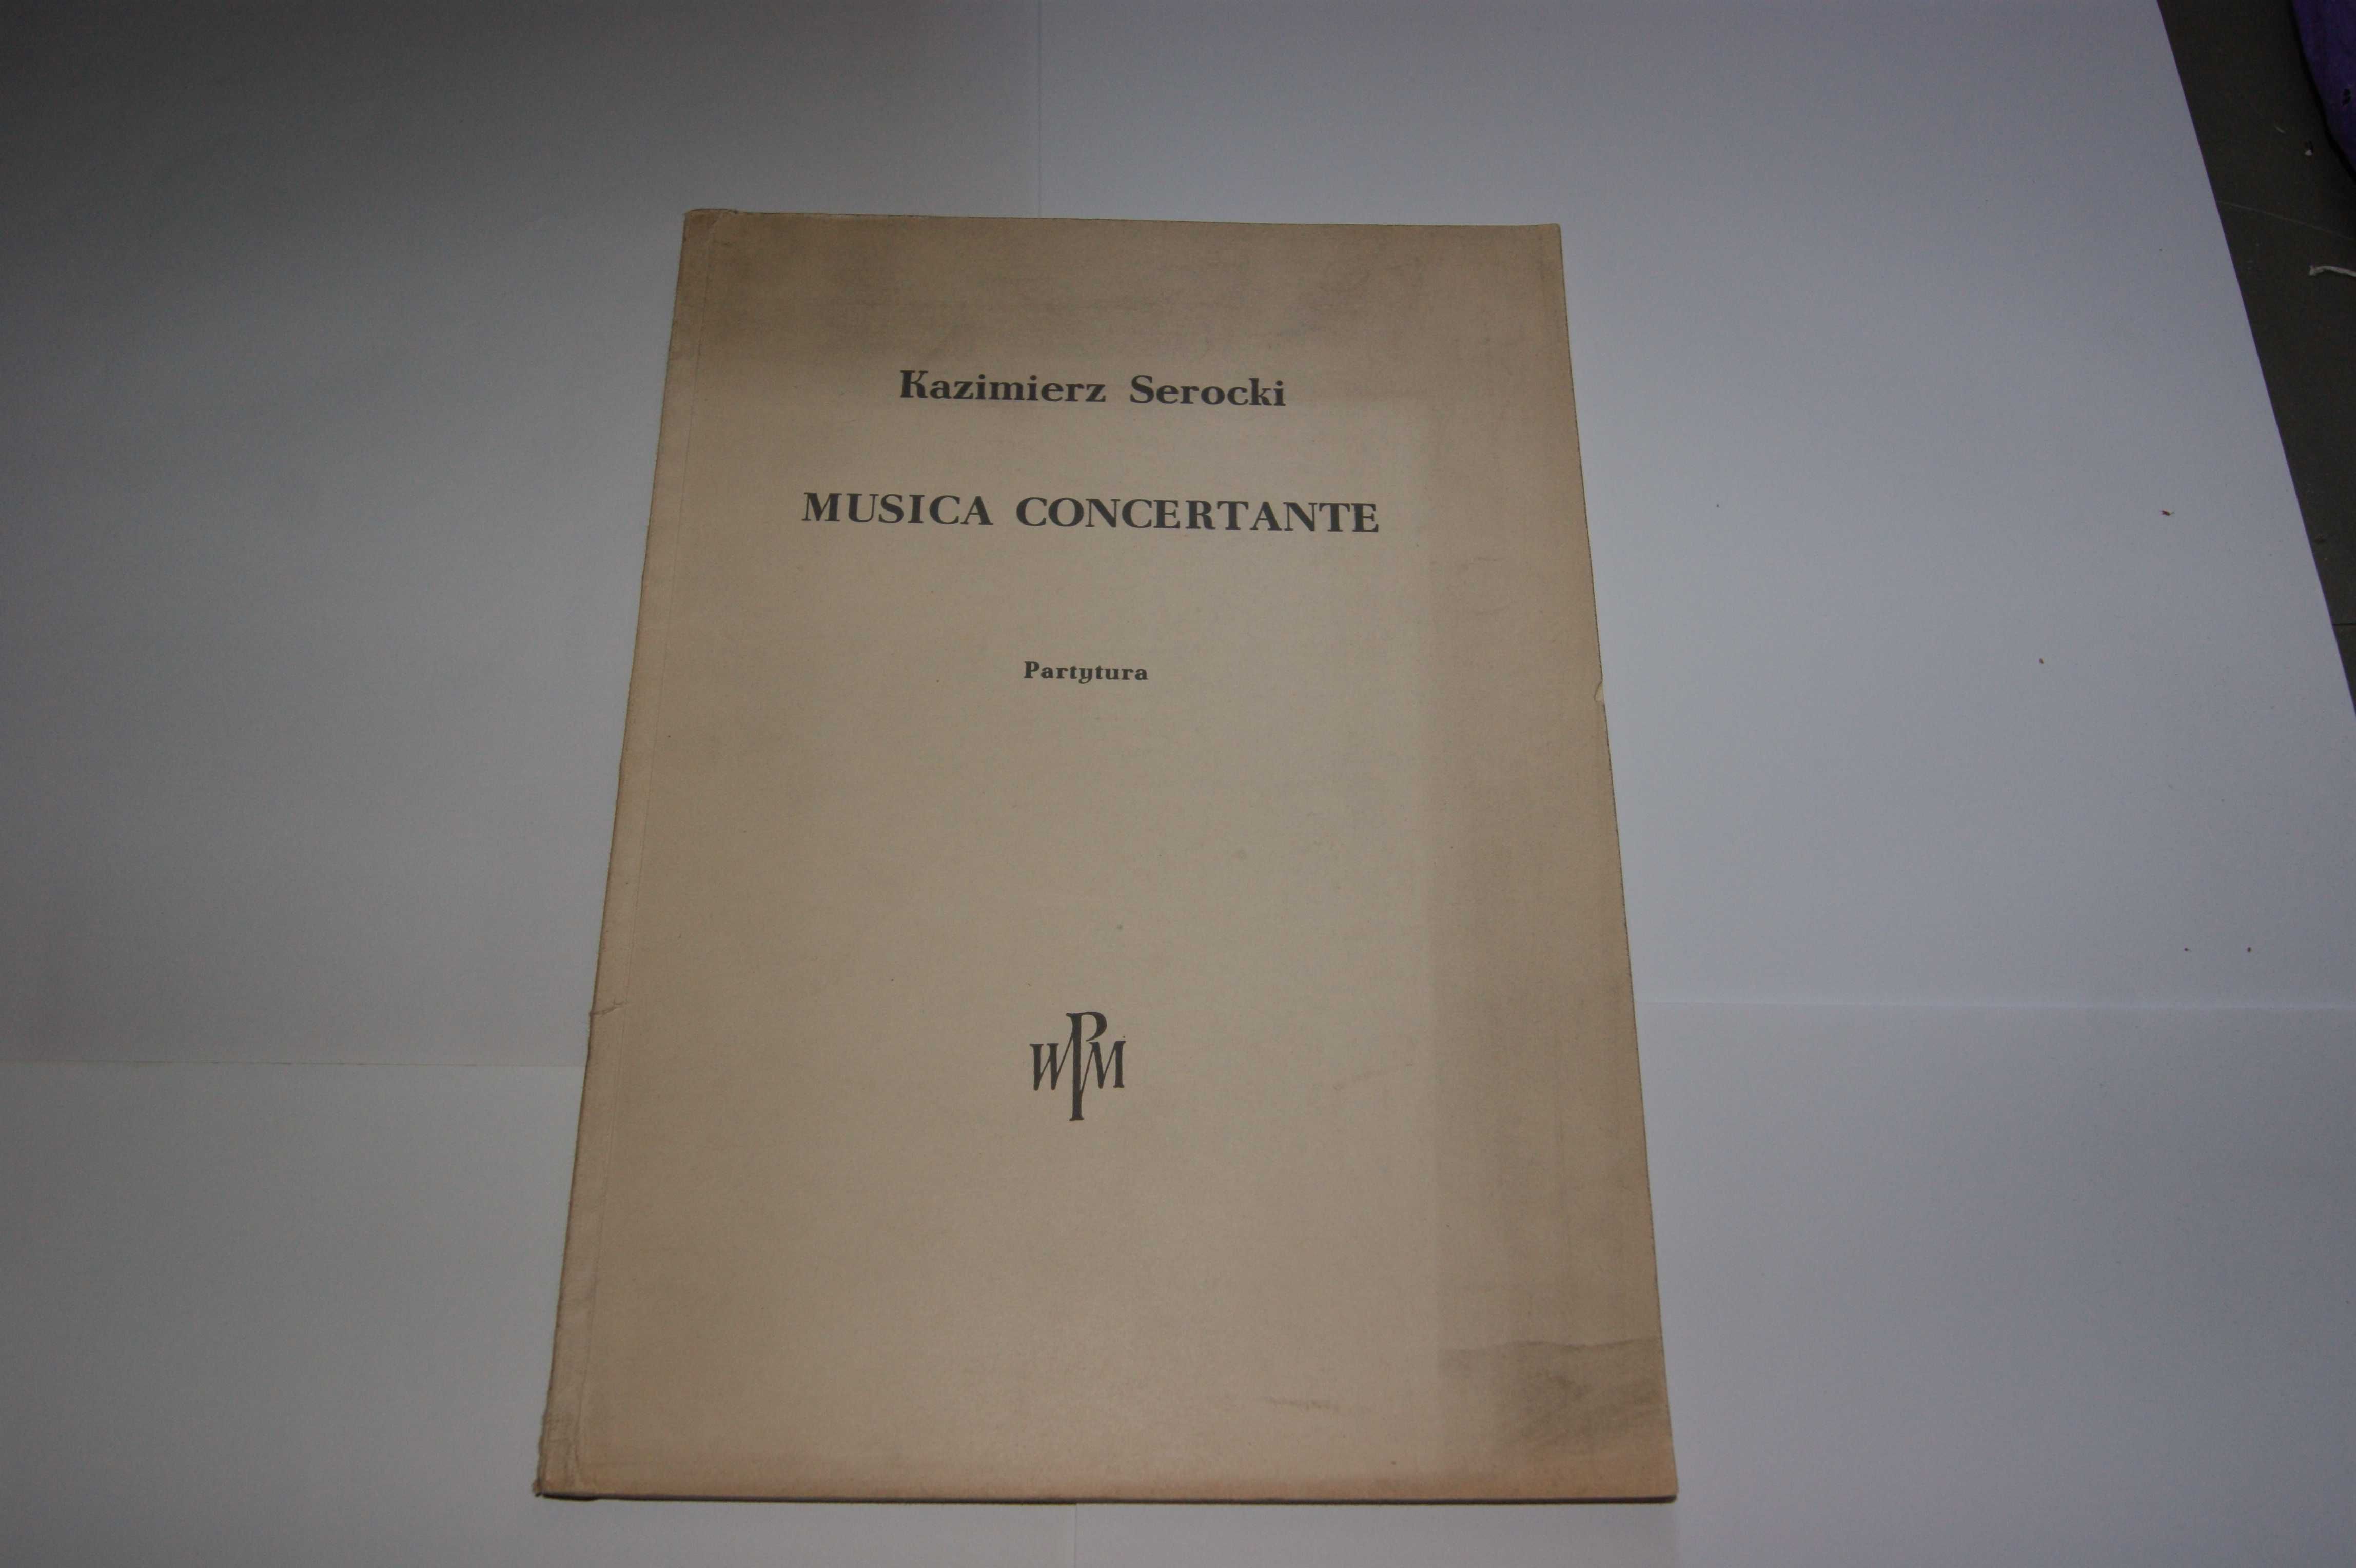 Kazimierz Serocki - Musica Concertante